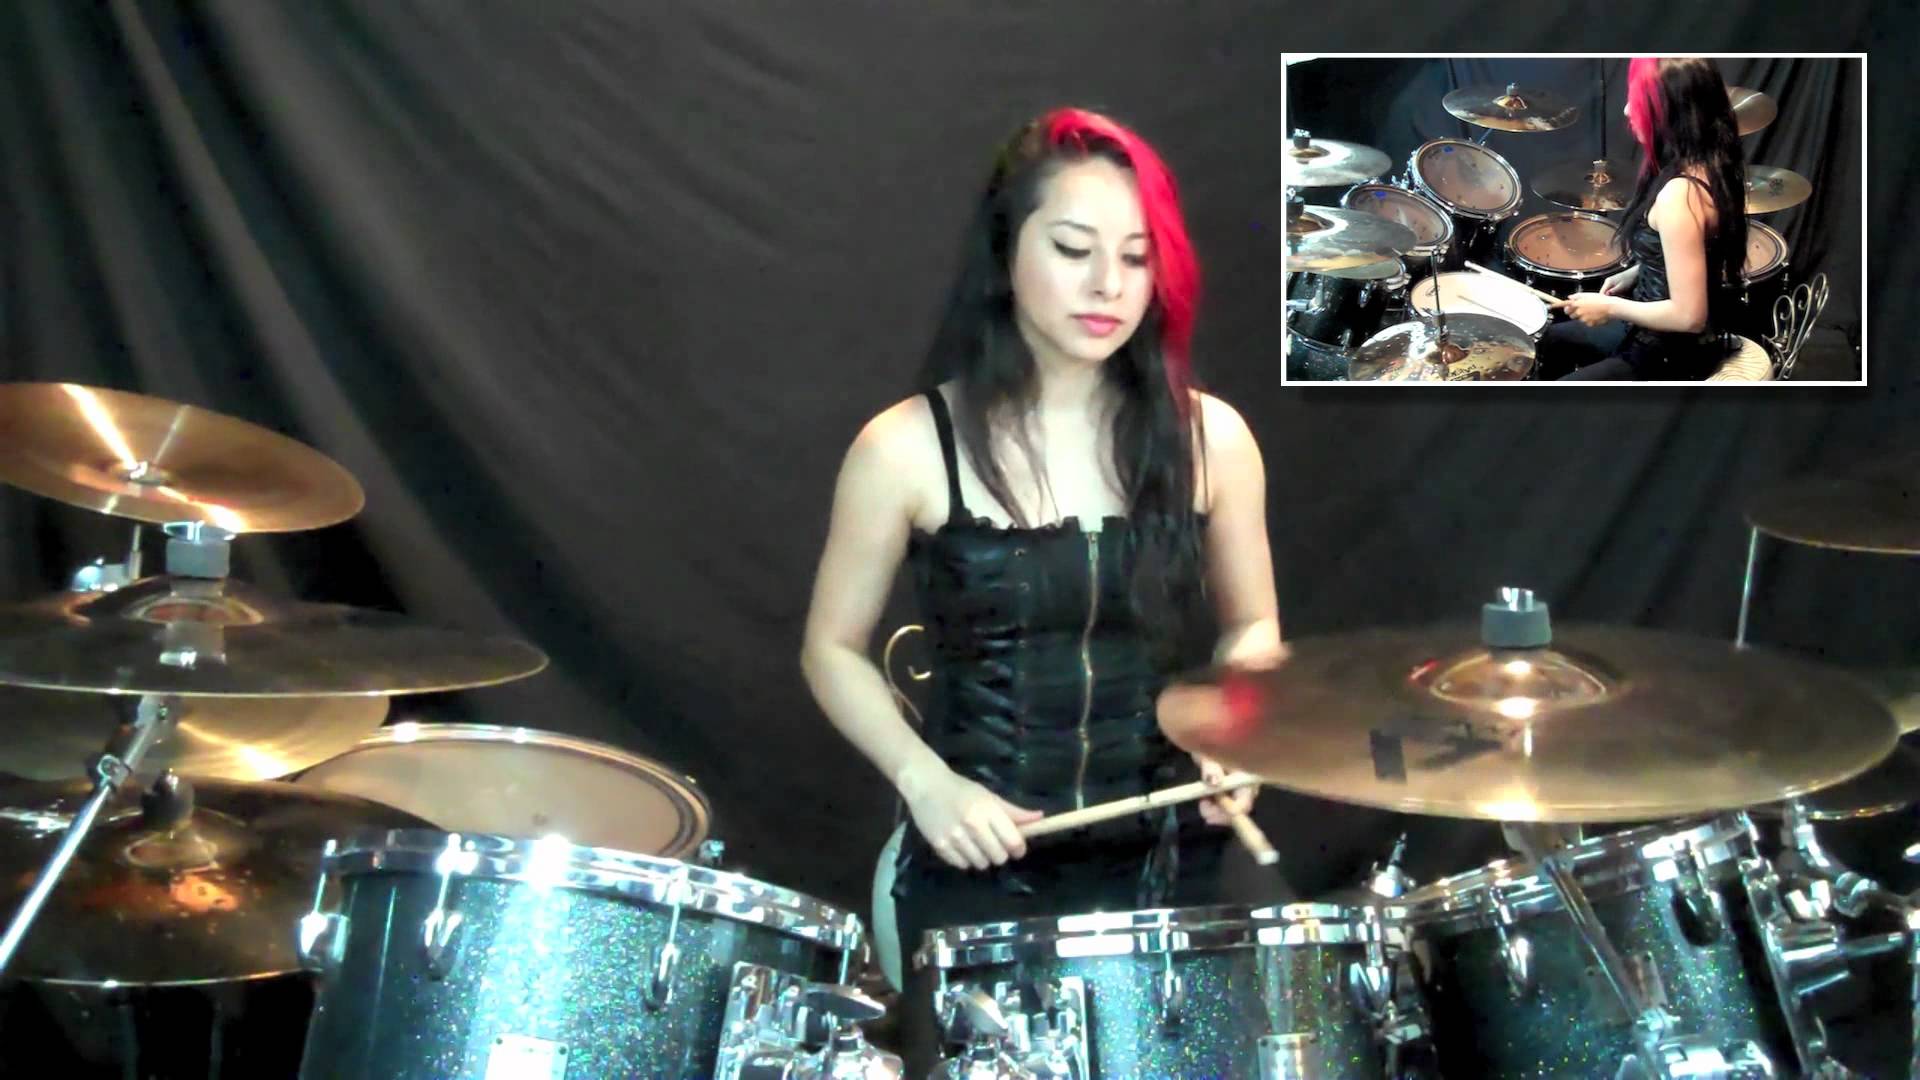 Lux Drummerette #6